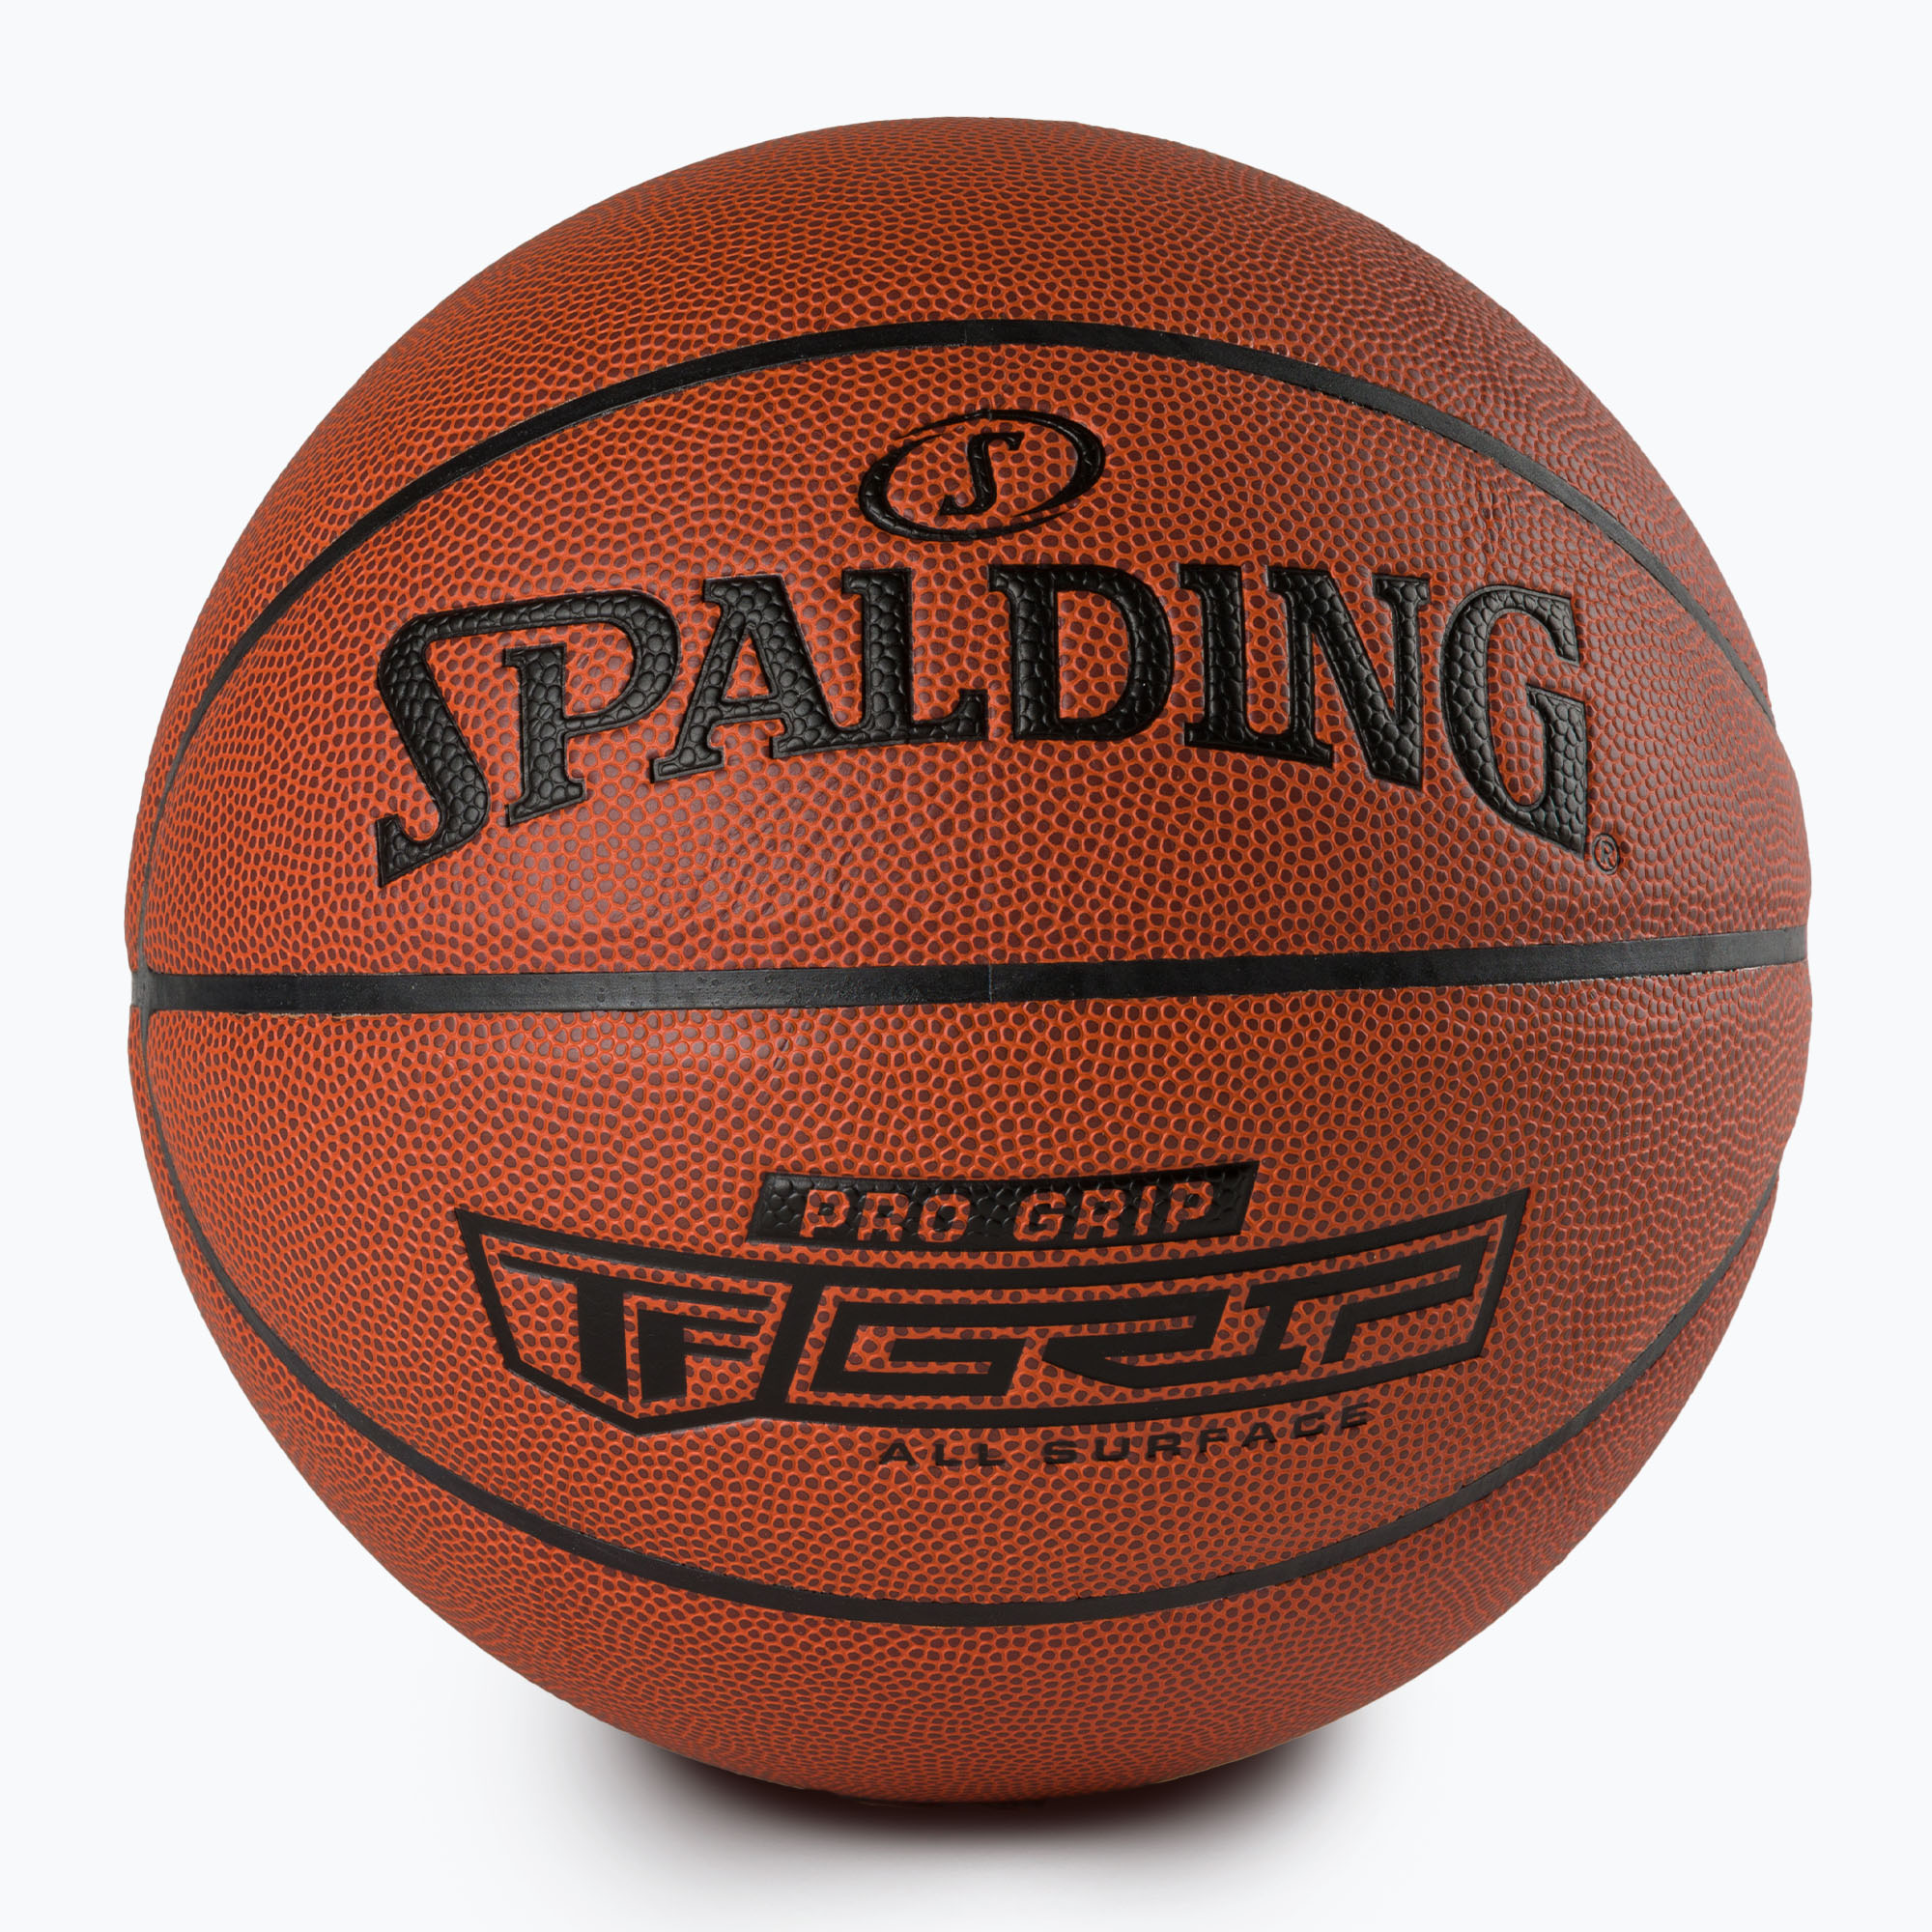 Spalding Pro Grip Football Orange 76874Z